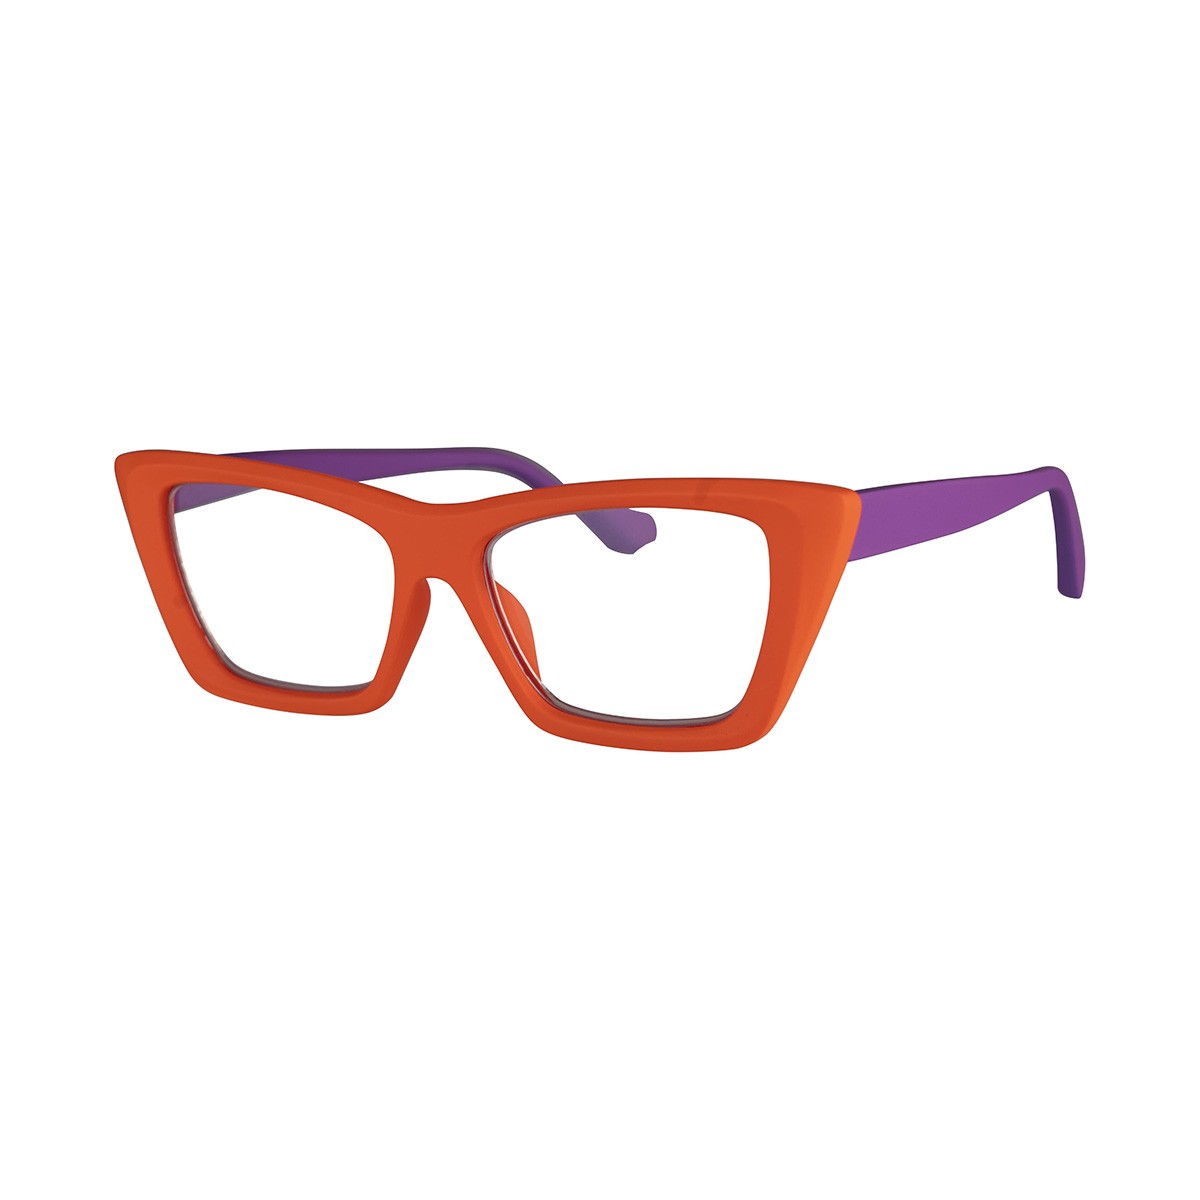 Iaview gafa de presbicia TOPY naranja-purpura +3,00